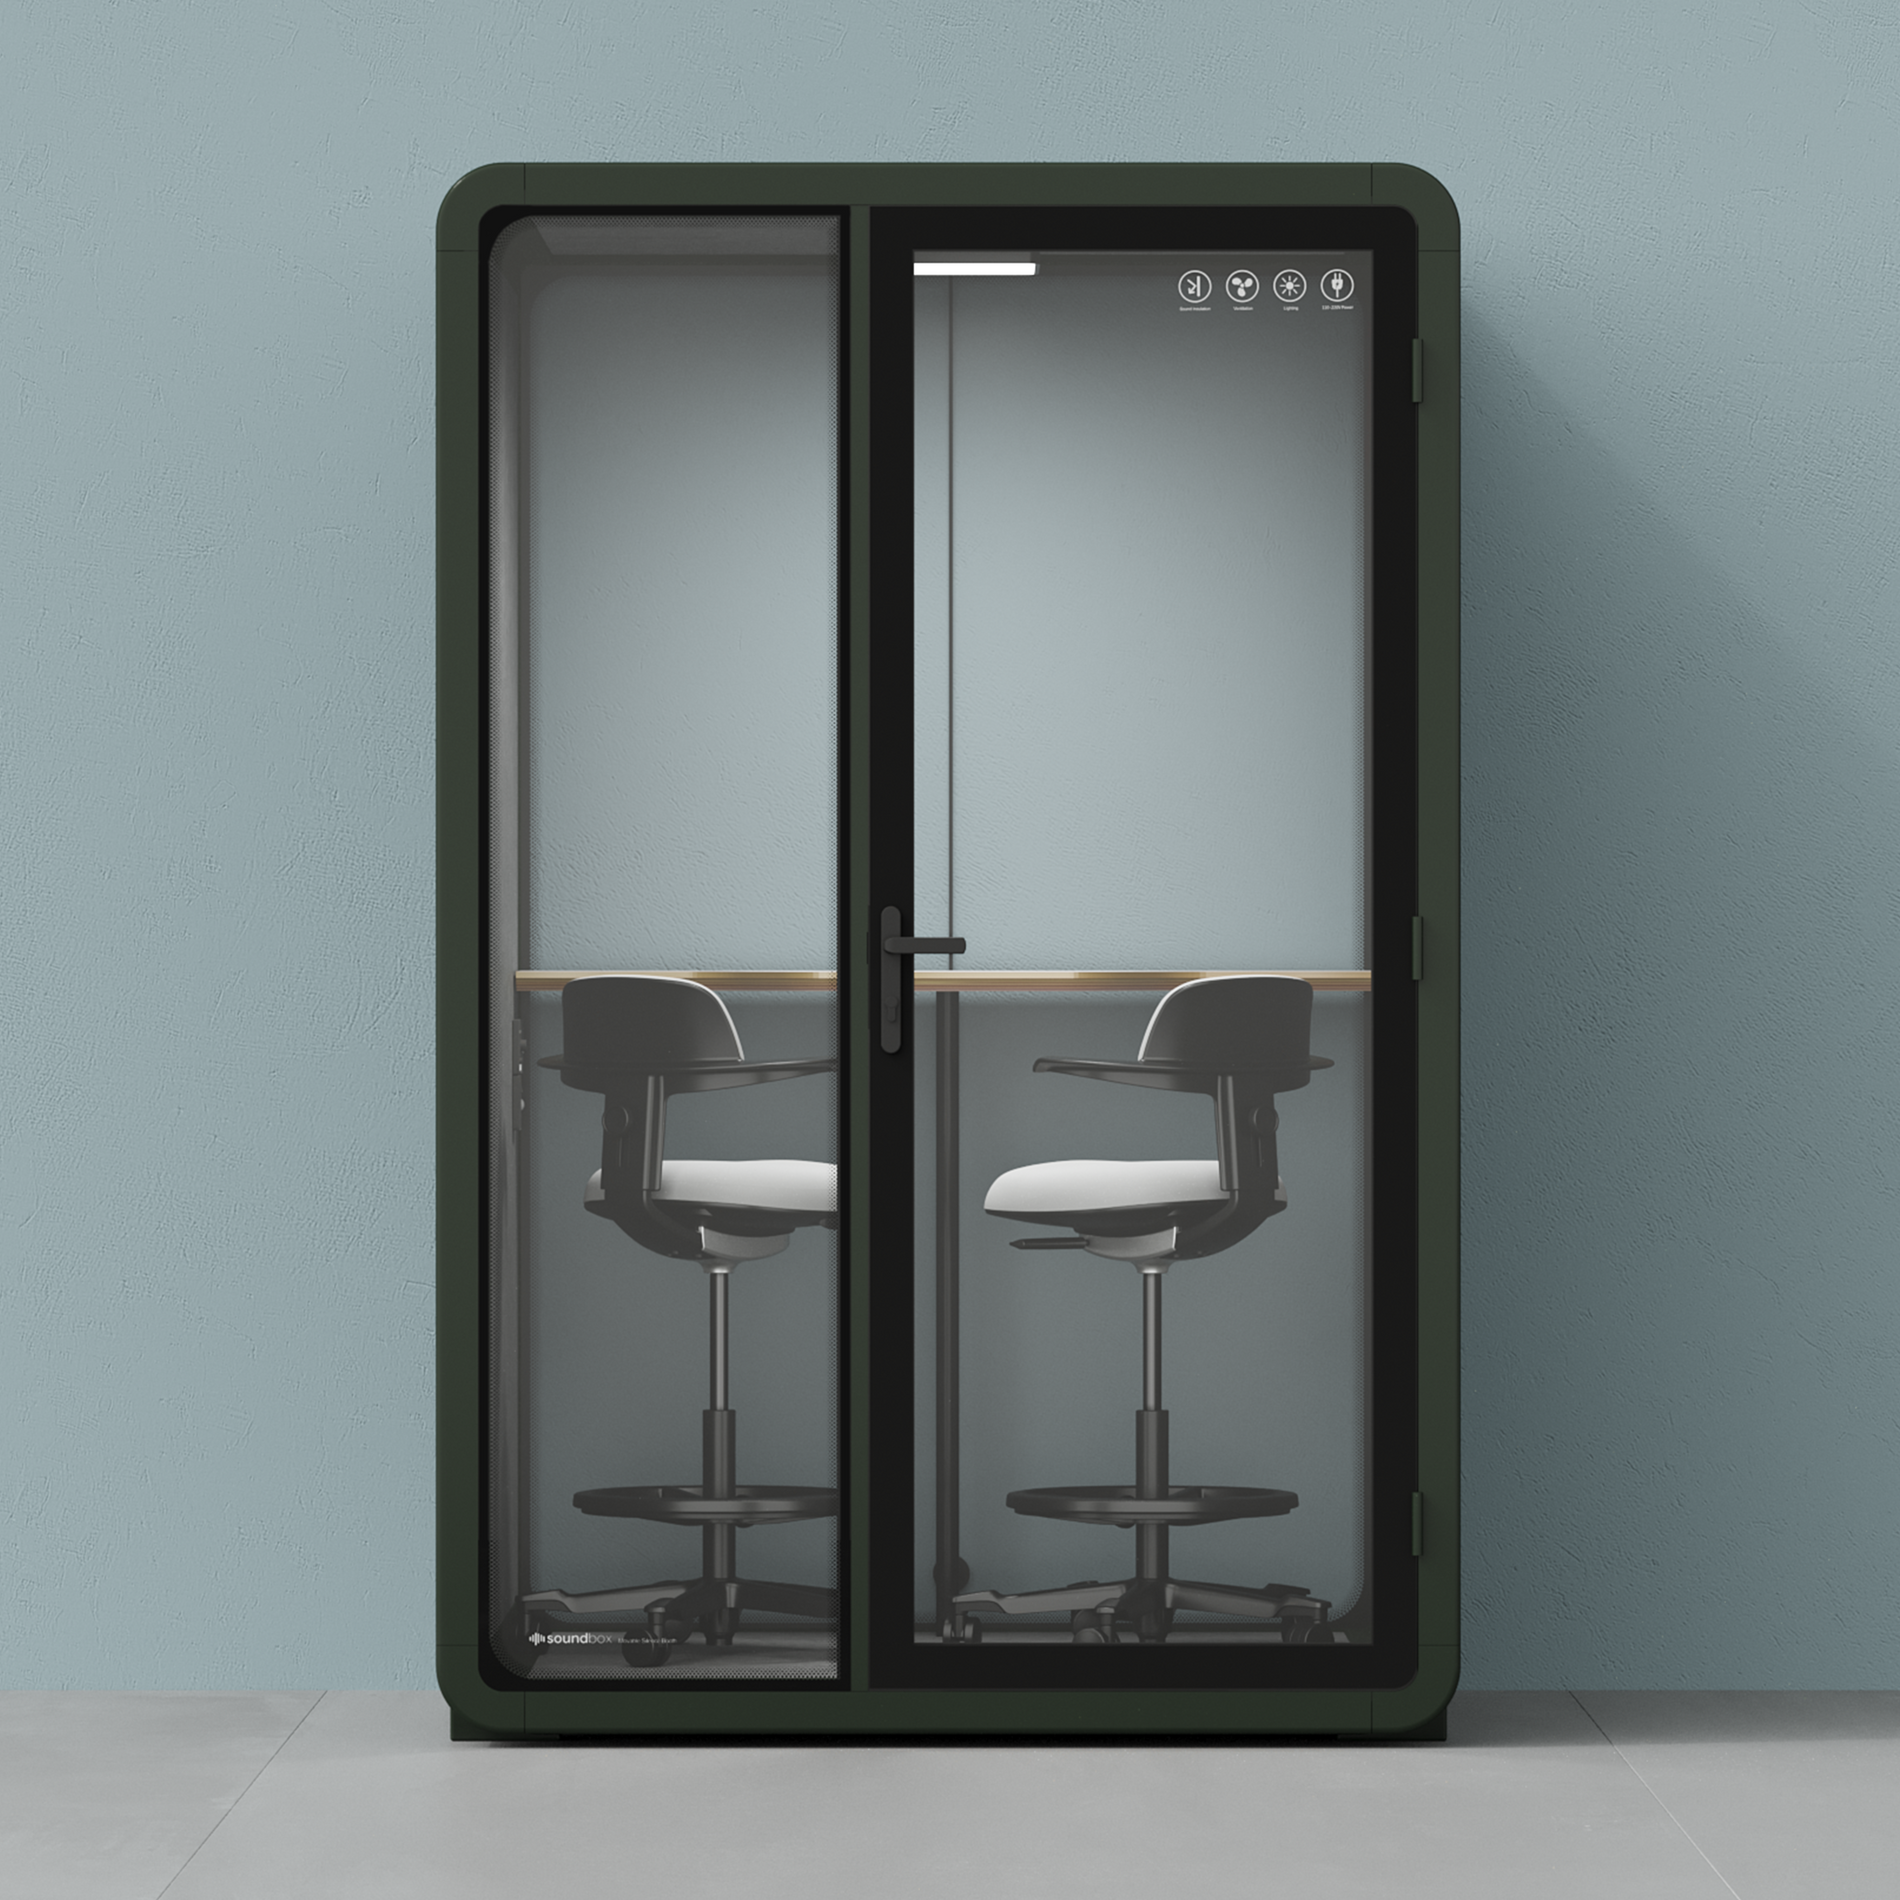 Quell - CoWorker - Pod 2 personnesDark Green / Dark Gray / Dual Zoom Room + Device Shelf + 2 Barstools